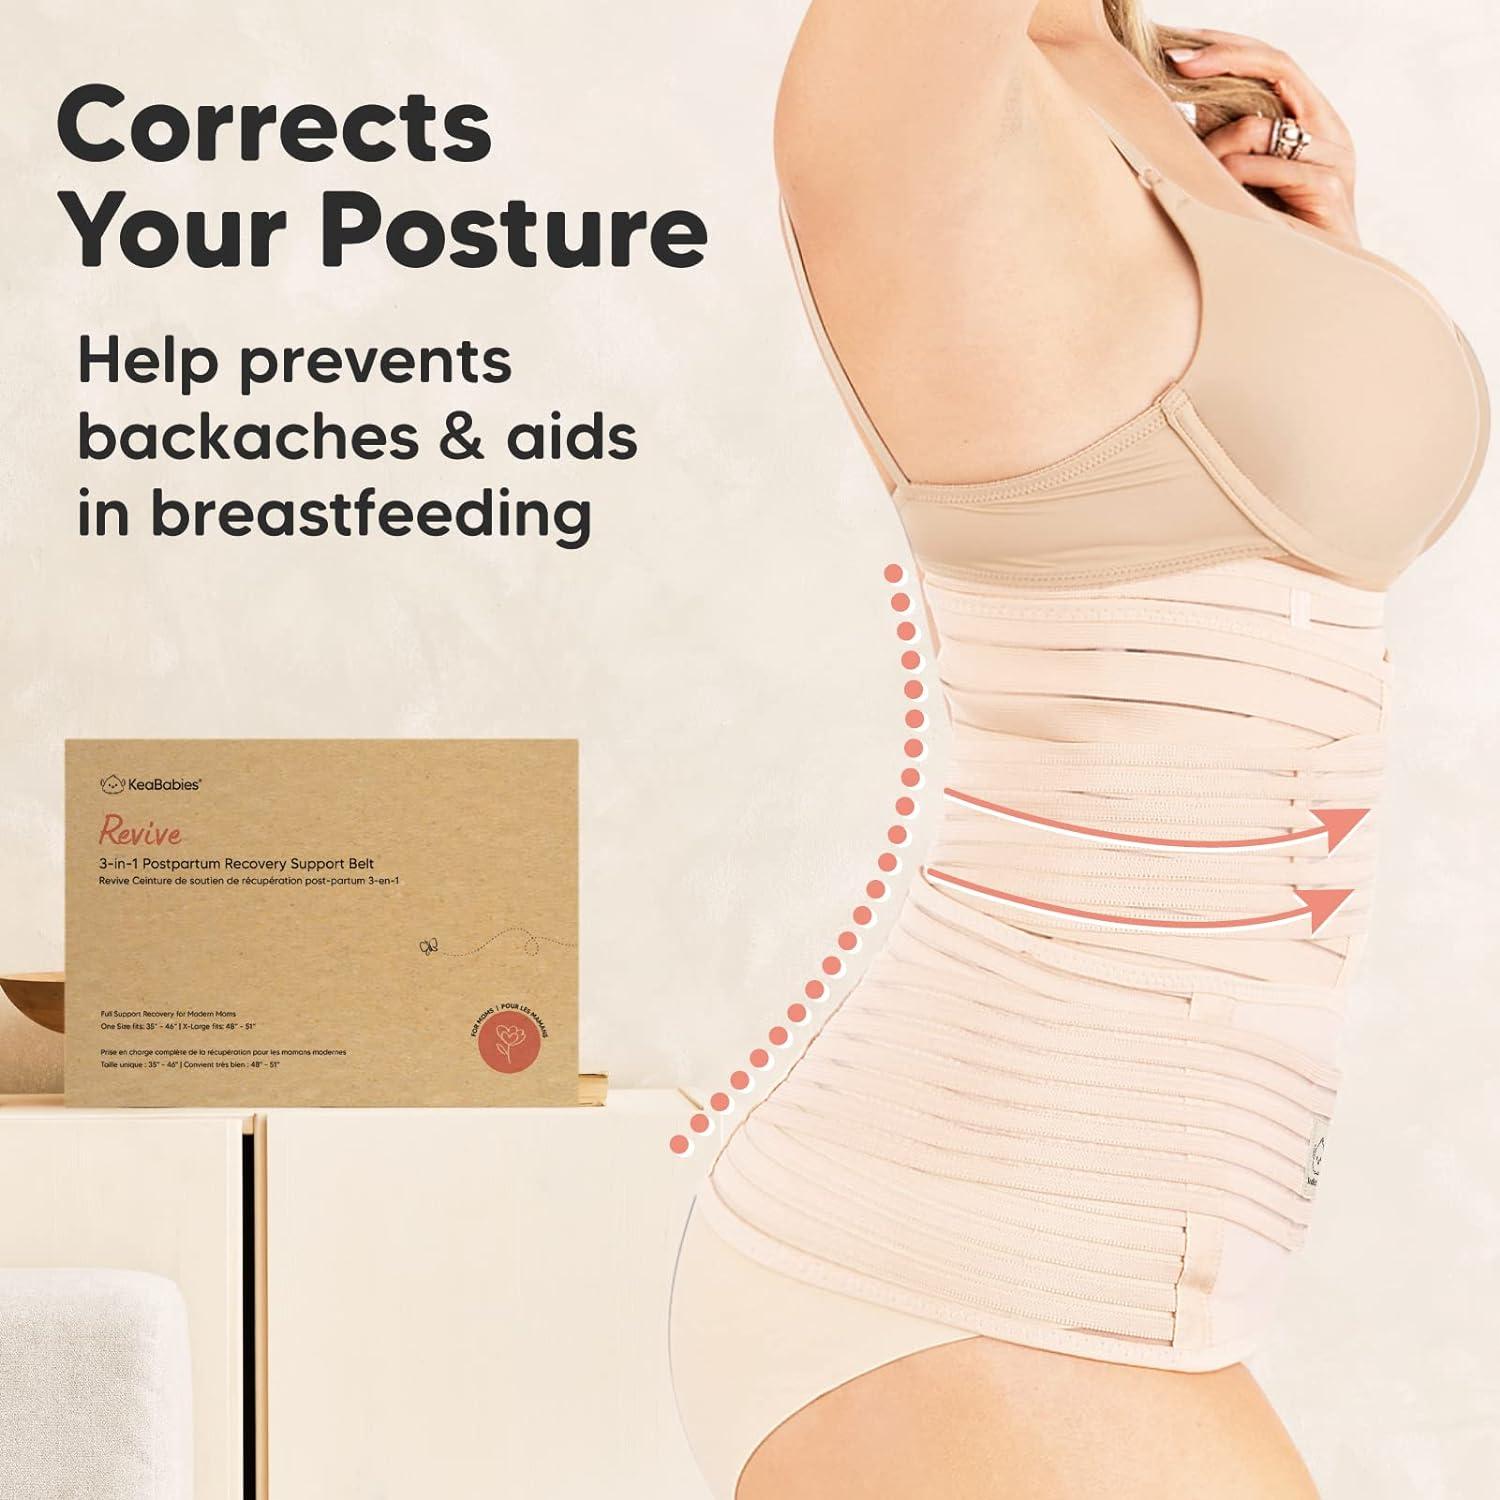 3 in 1 Postpartum Support - Recovery Belly/waist/pelvis Belt